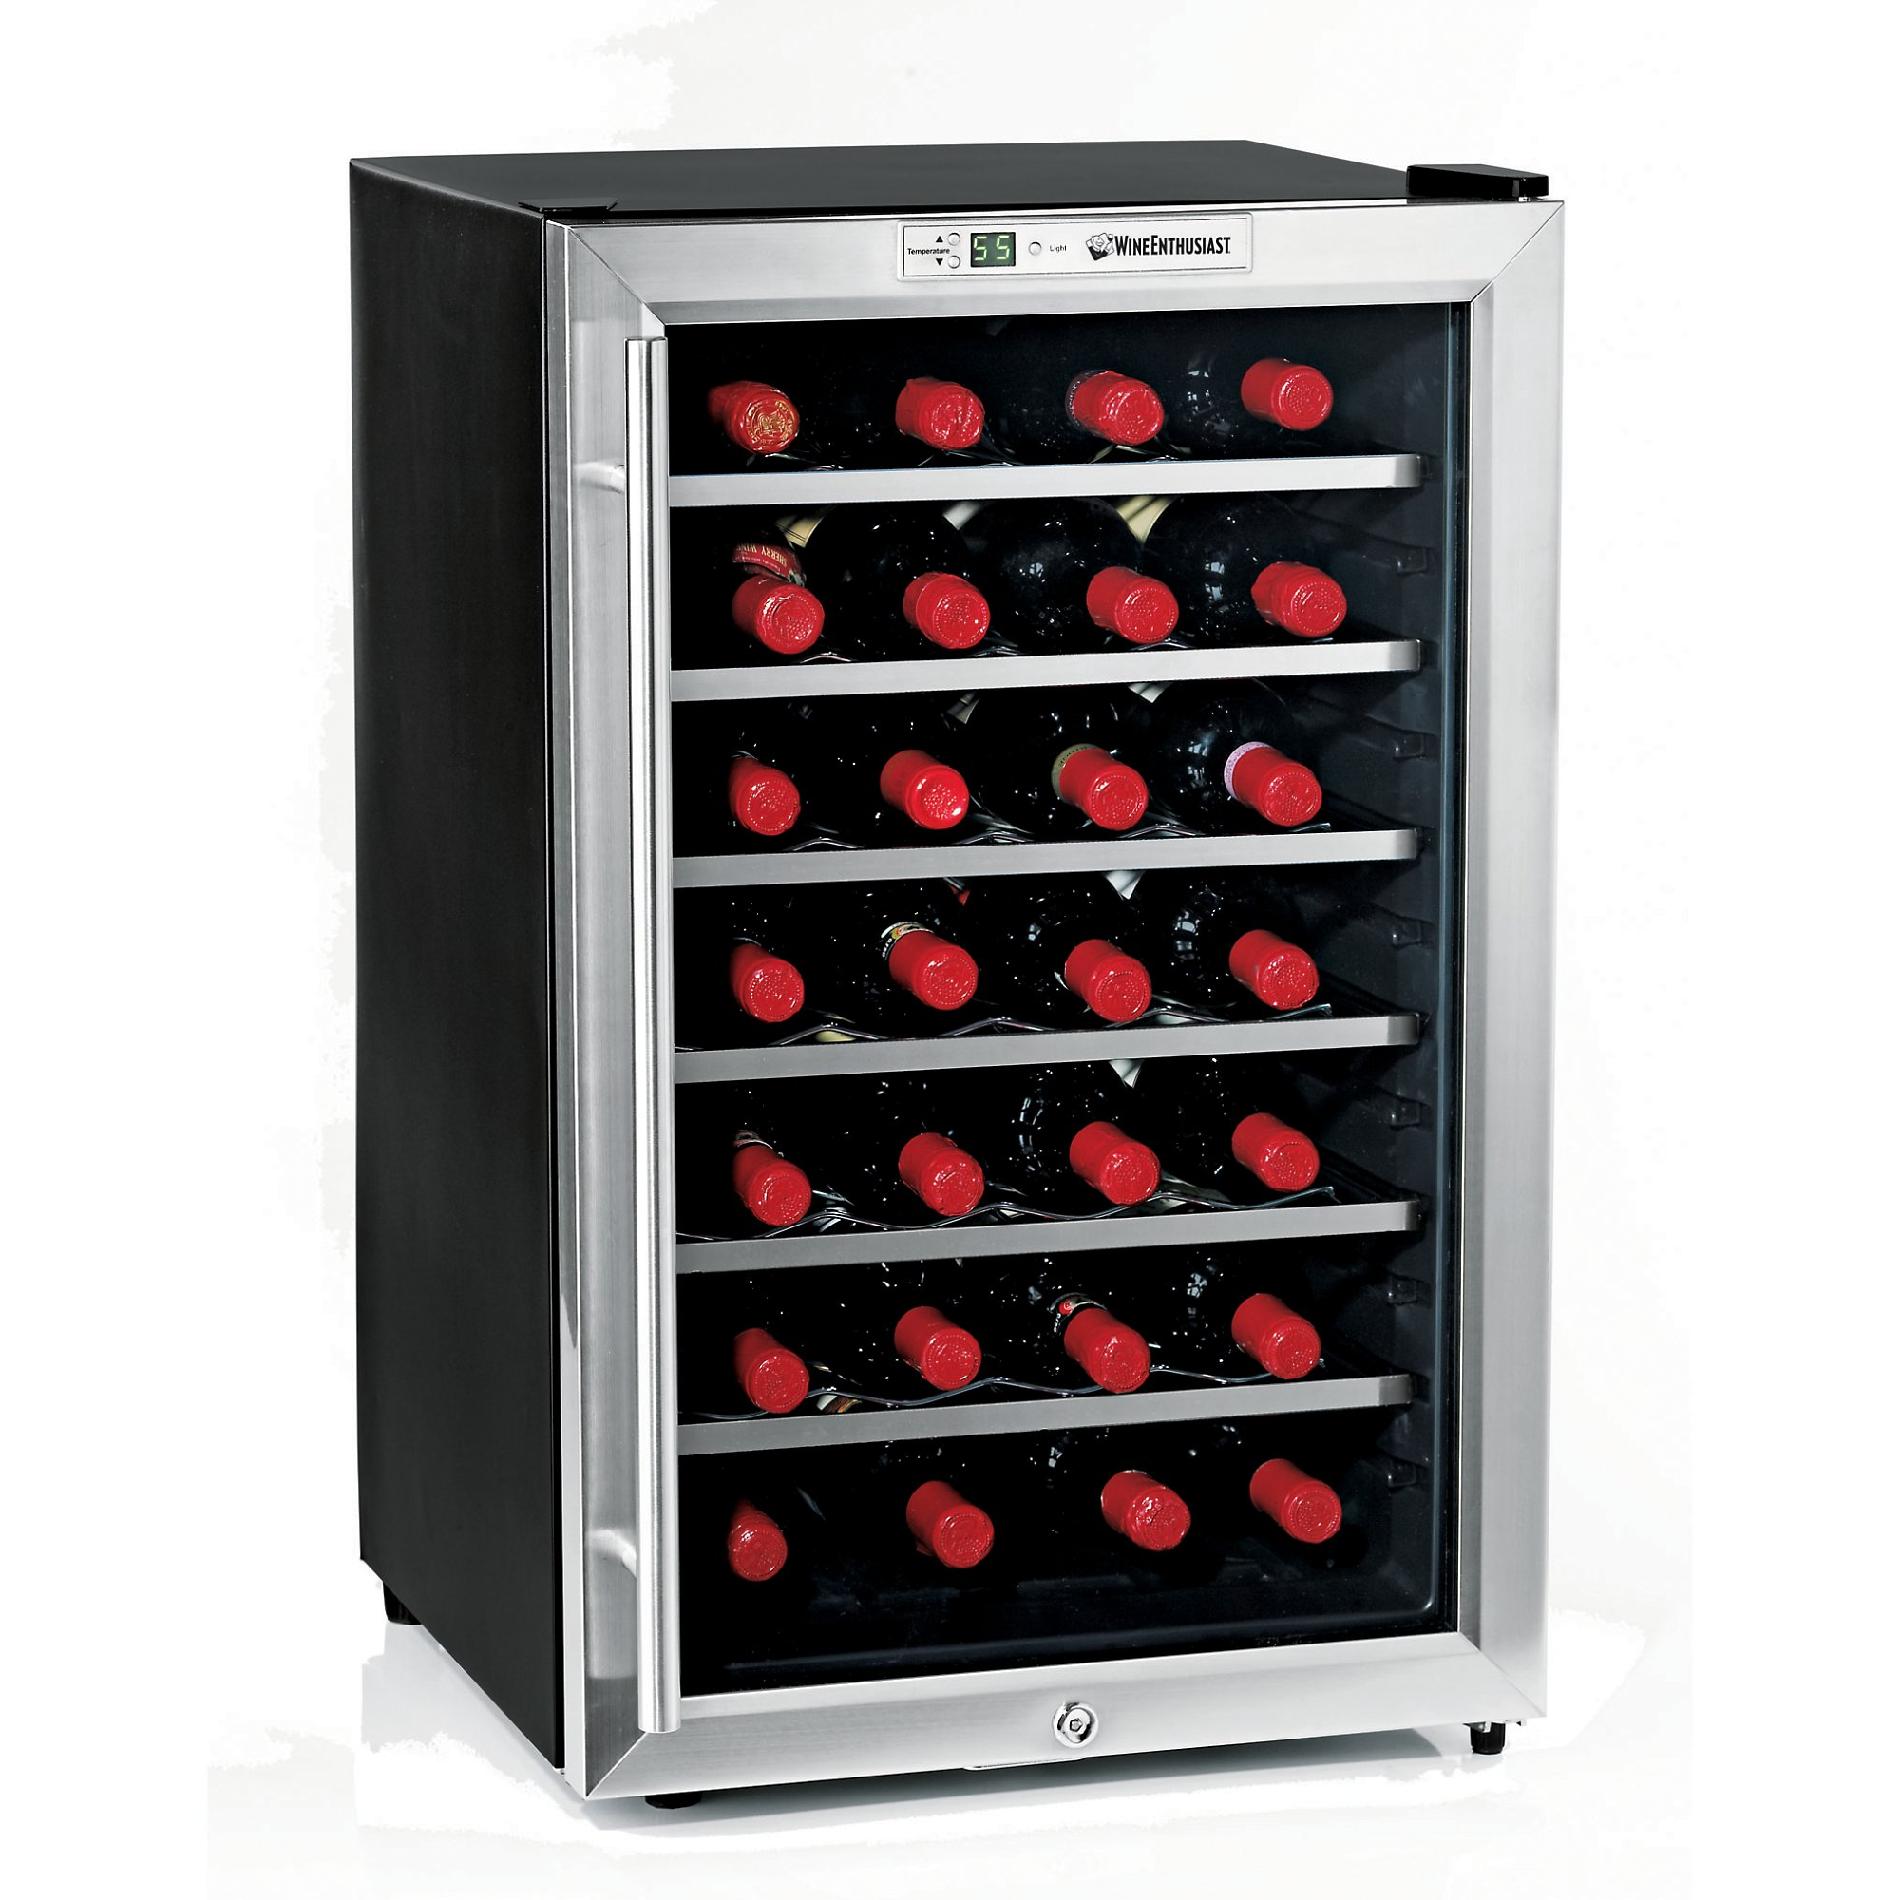 Wine Enthusiast 272 02 29 Silent 28 Bottle Wine Refrigerator (Stainless Steel)